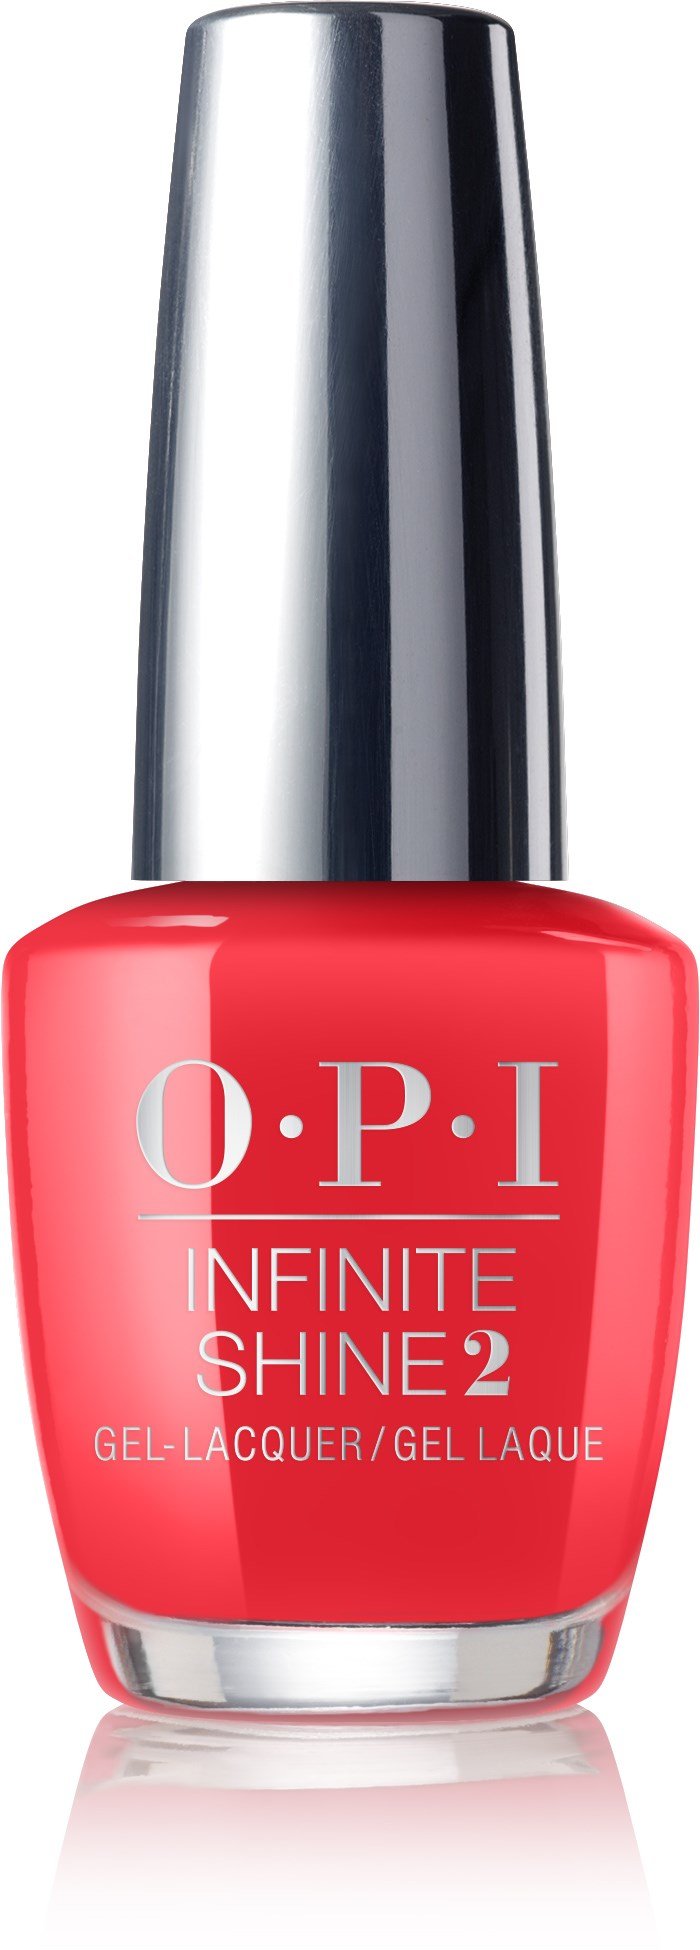 OPI Infinite Shine - Camarones cajún